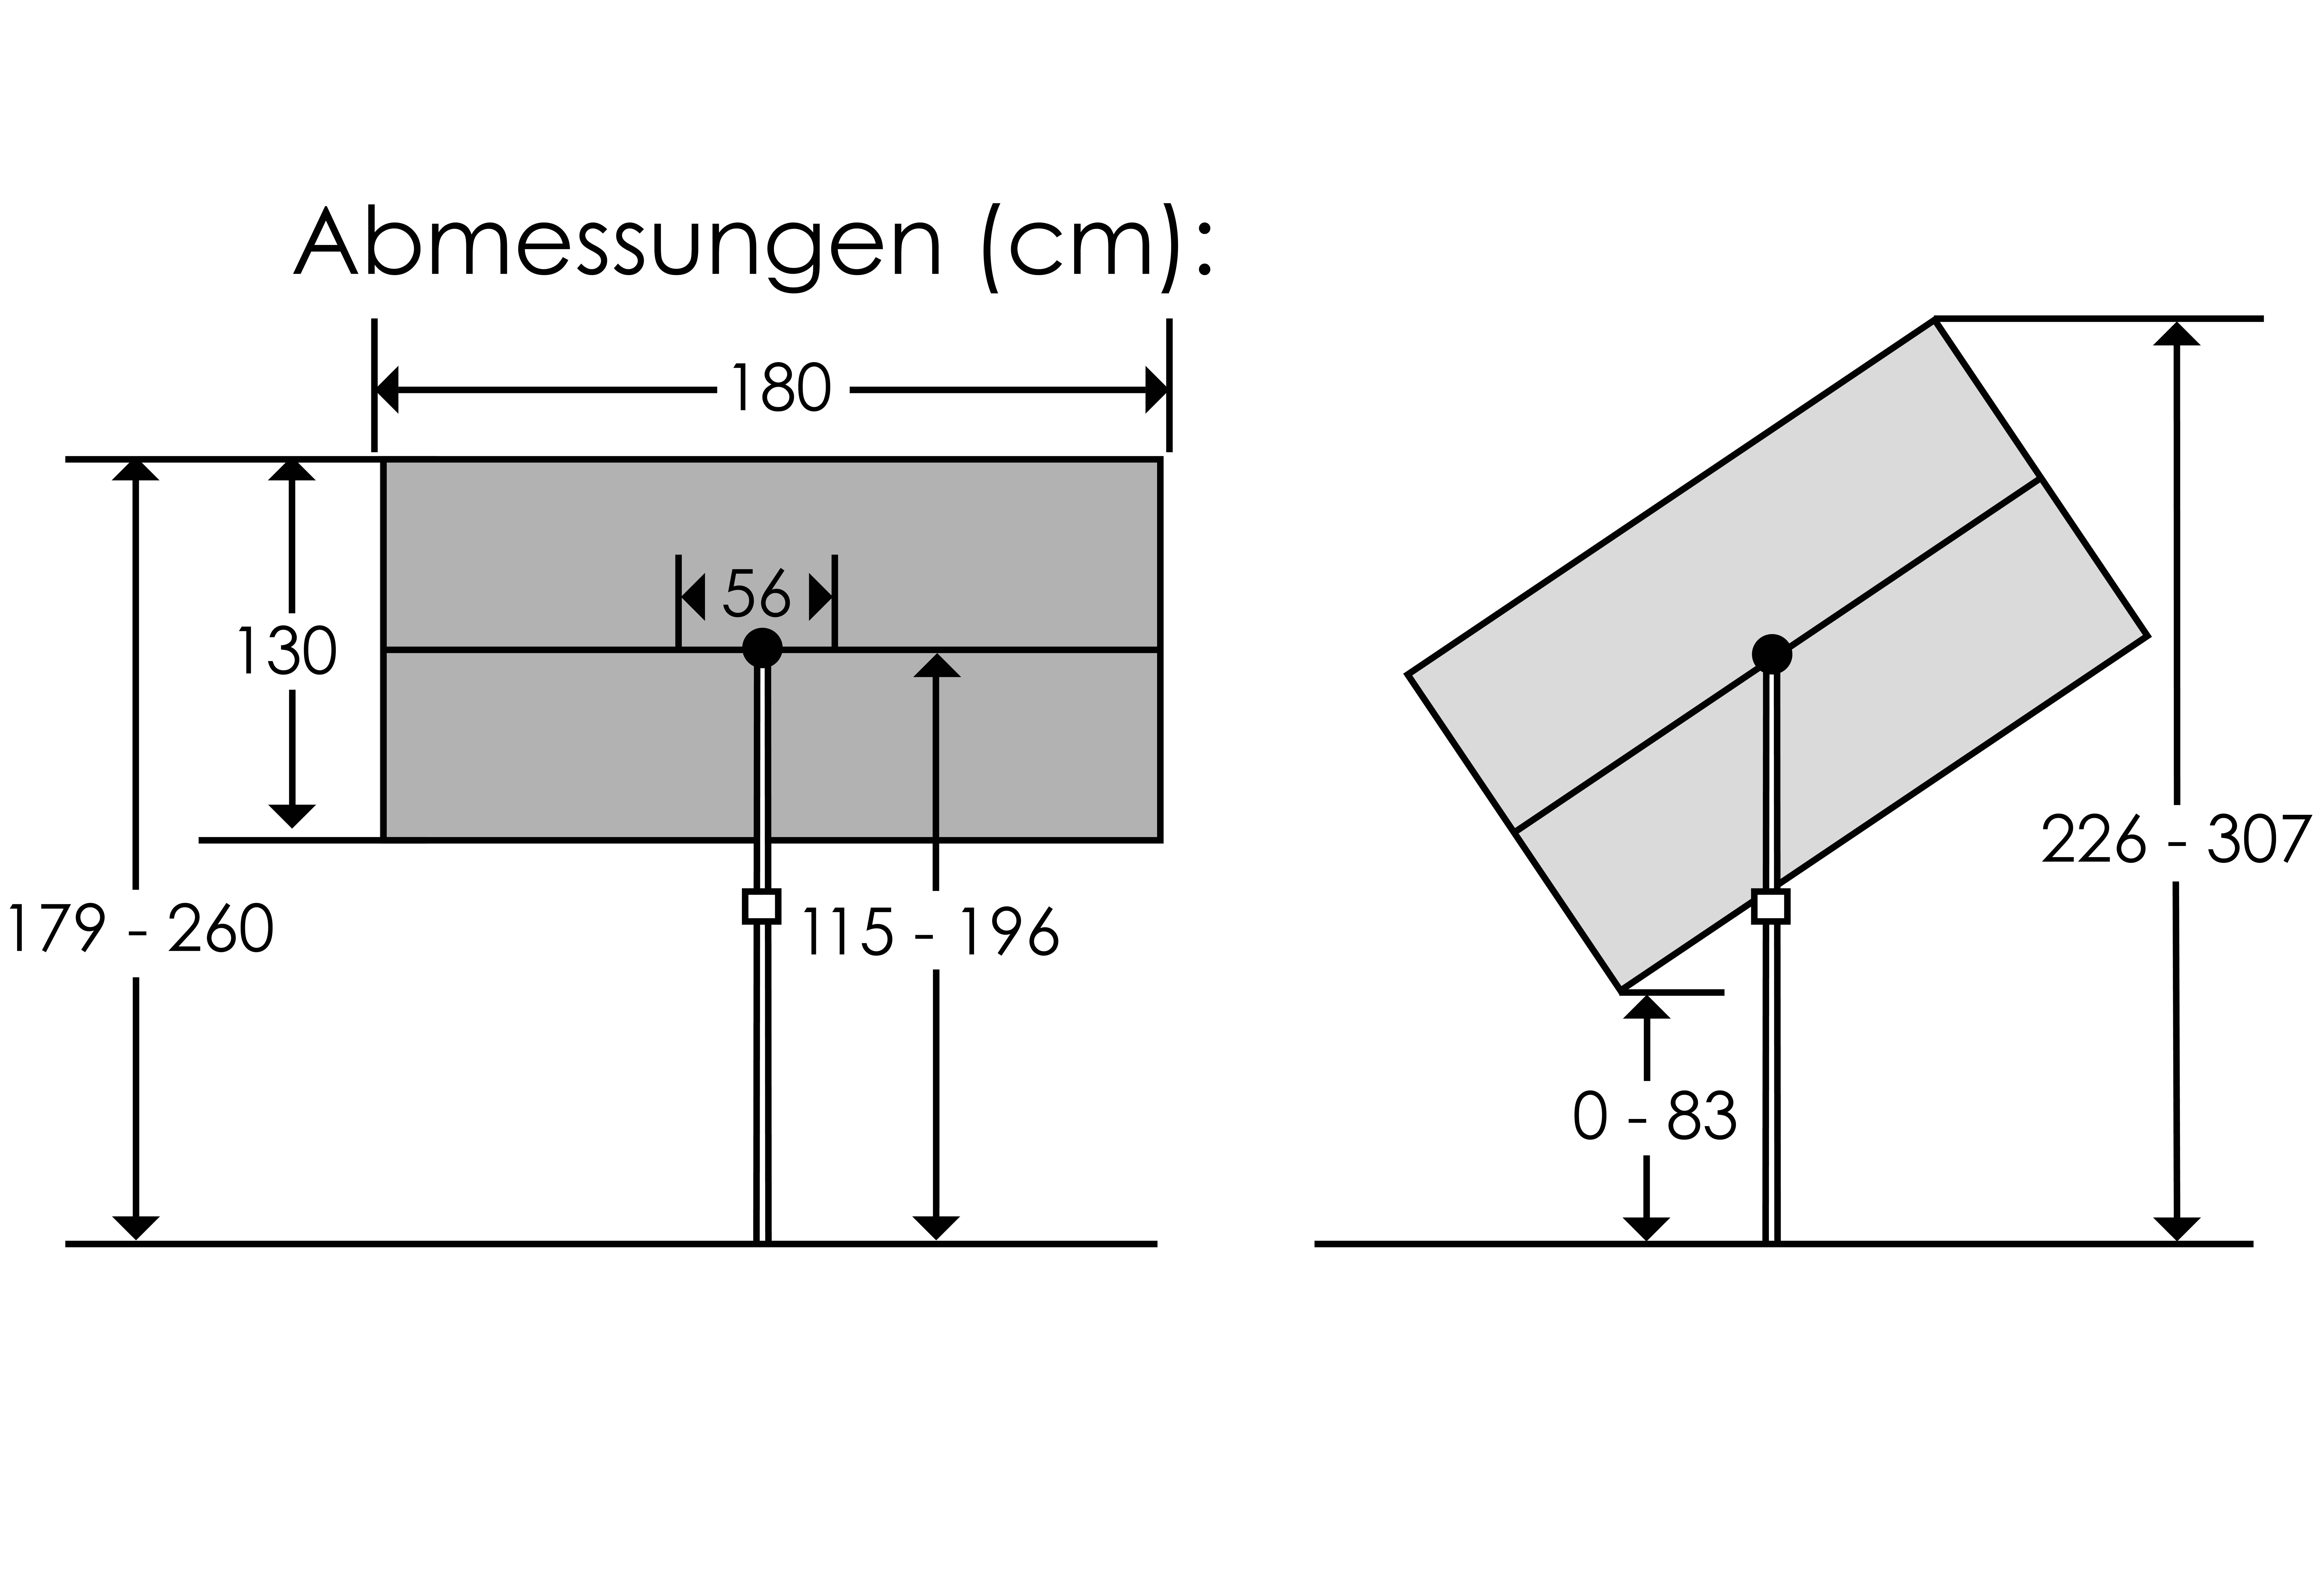 Schneider Schirme Balkonschirm »»Avellino««, 180x130 cm, flexibler Allrounder unter den Sonnenschirmen